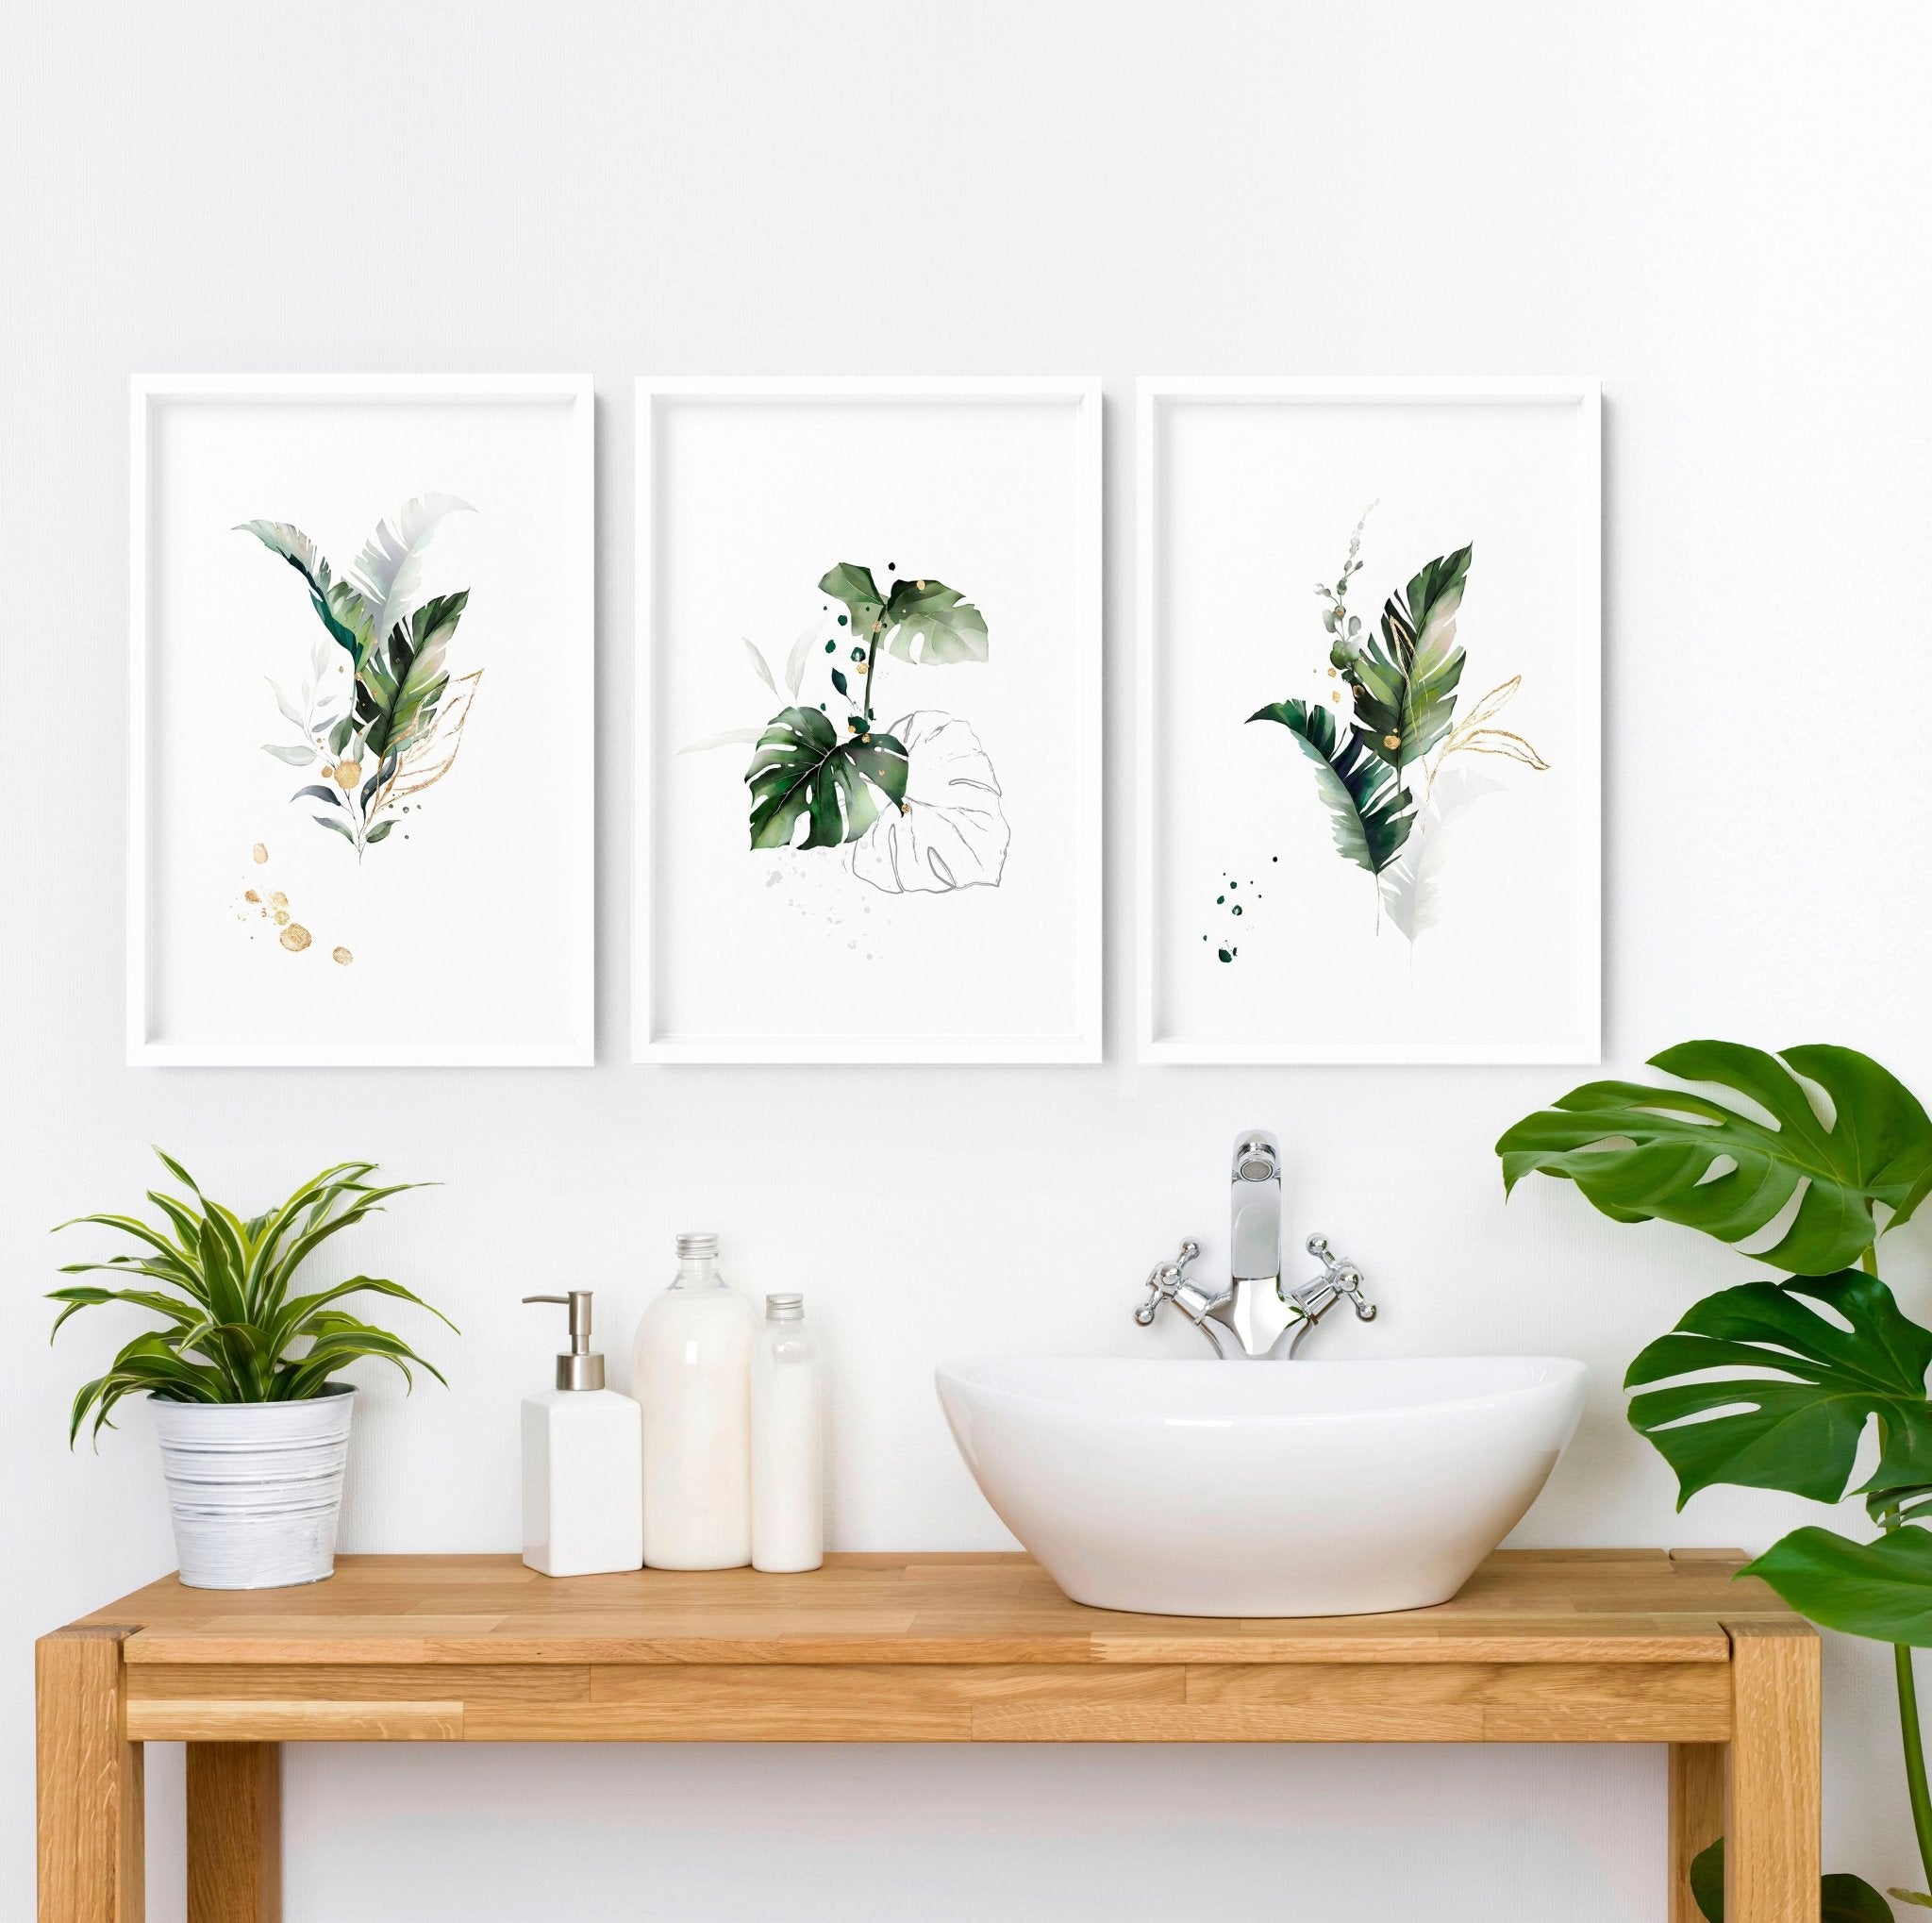 Modern tropical decor for Bathroom | set of 3 wall art prints - About Wall Art